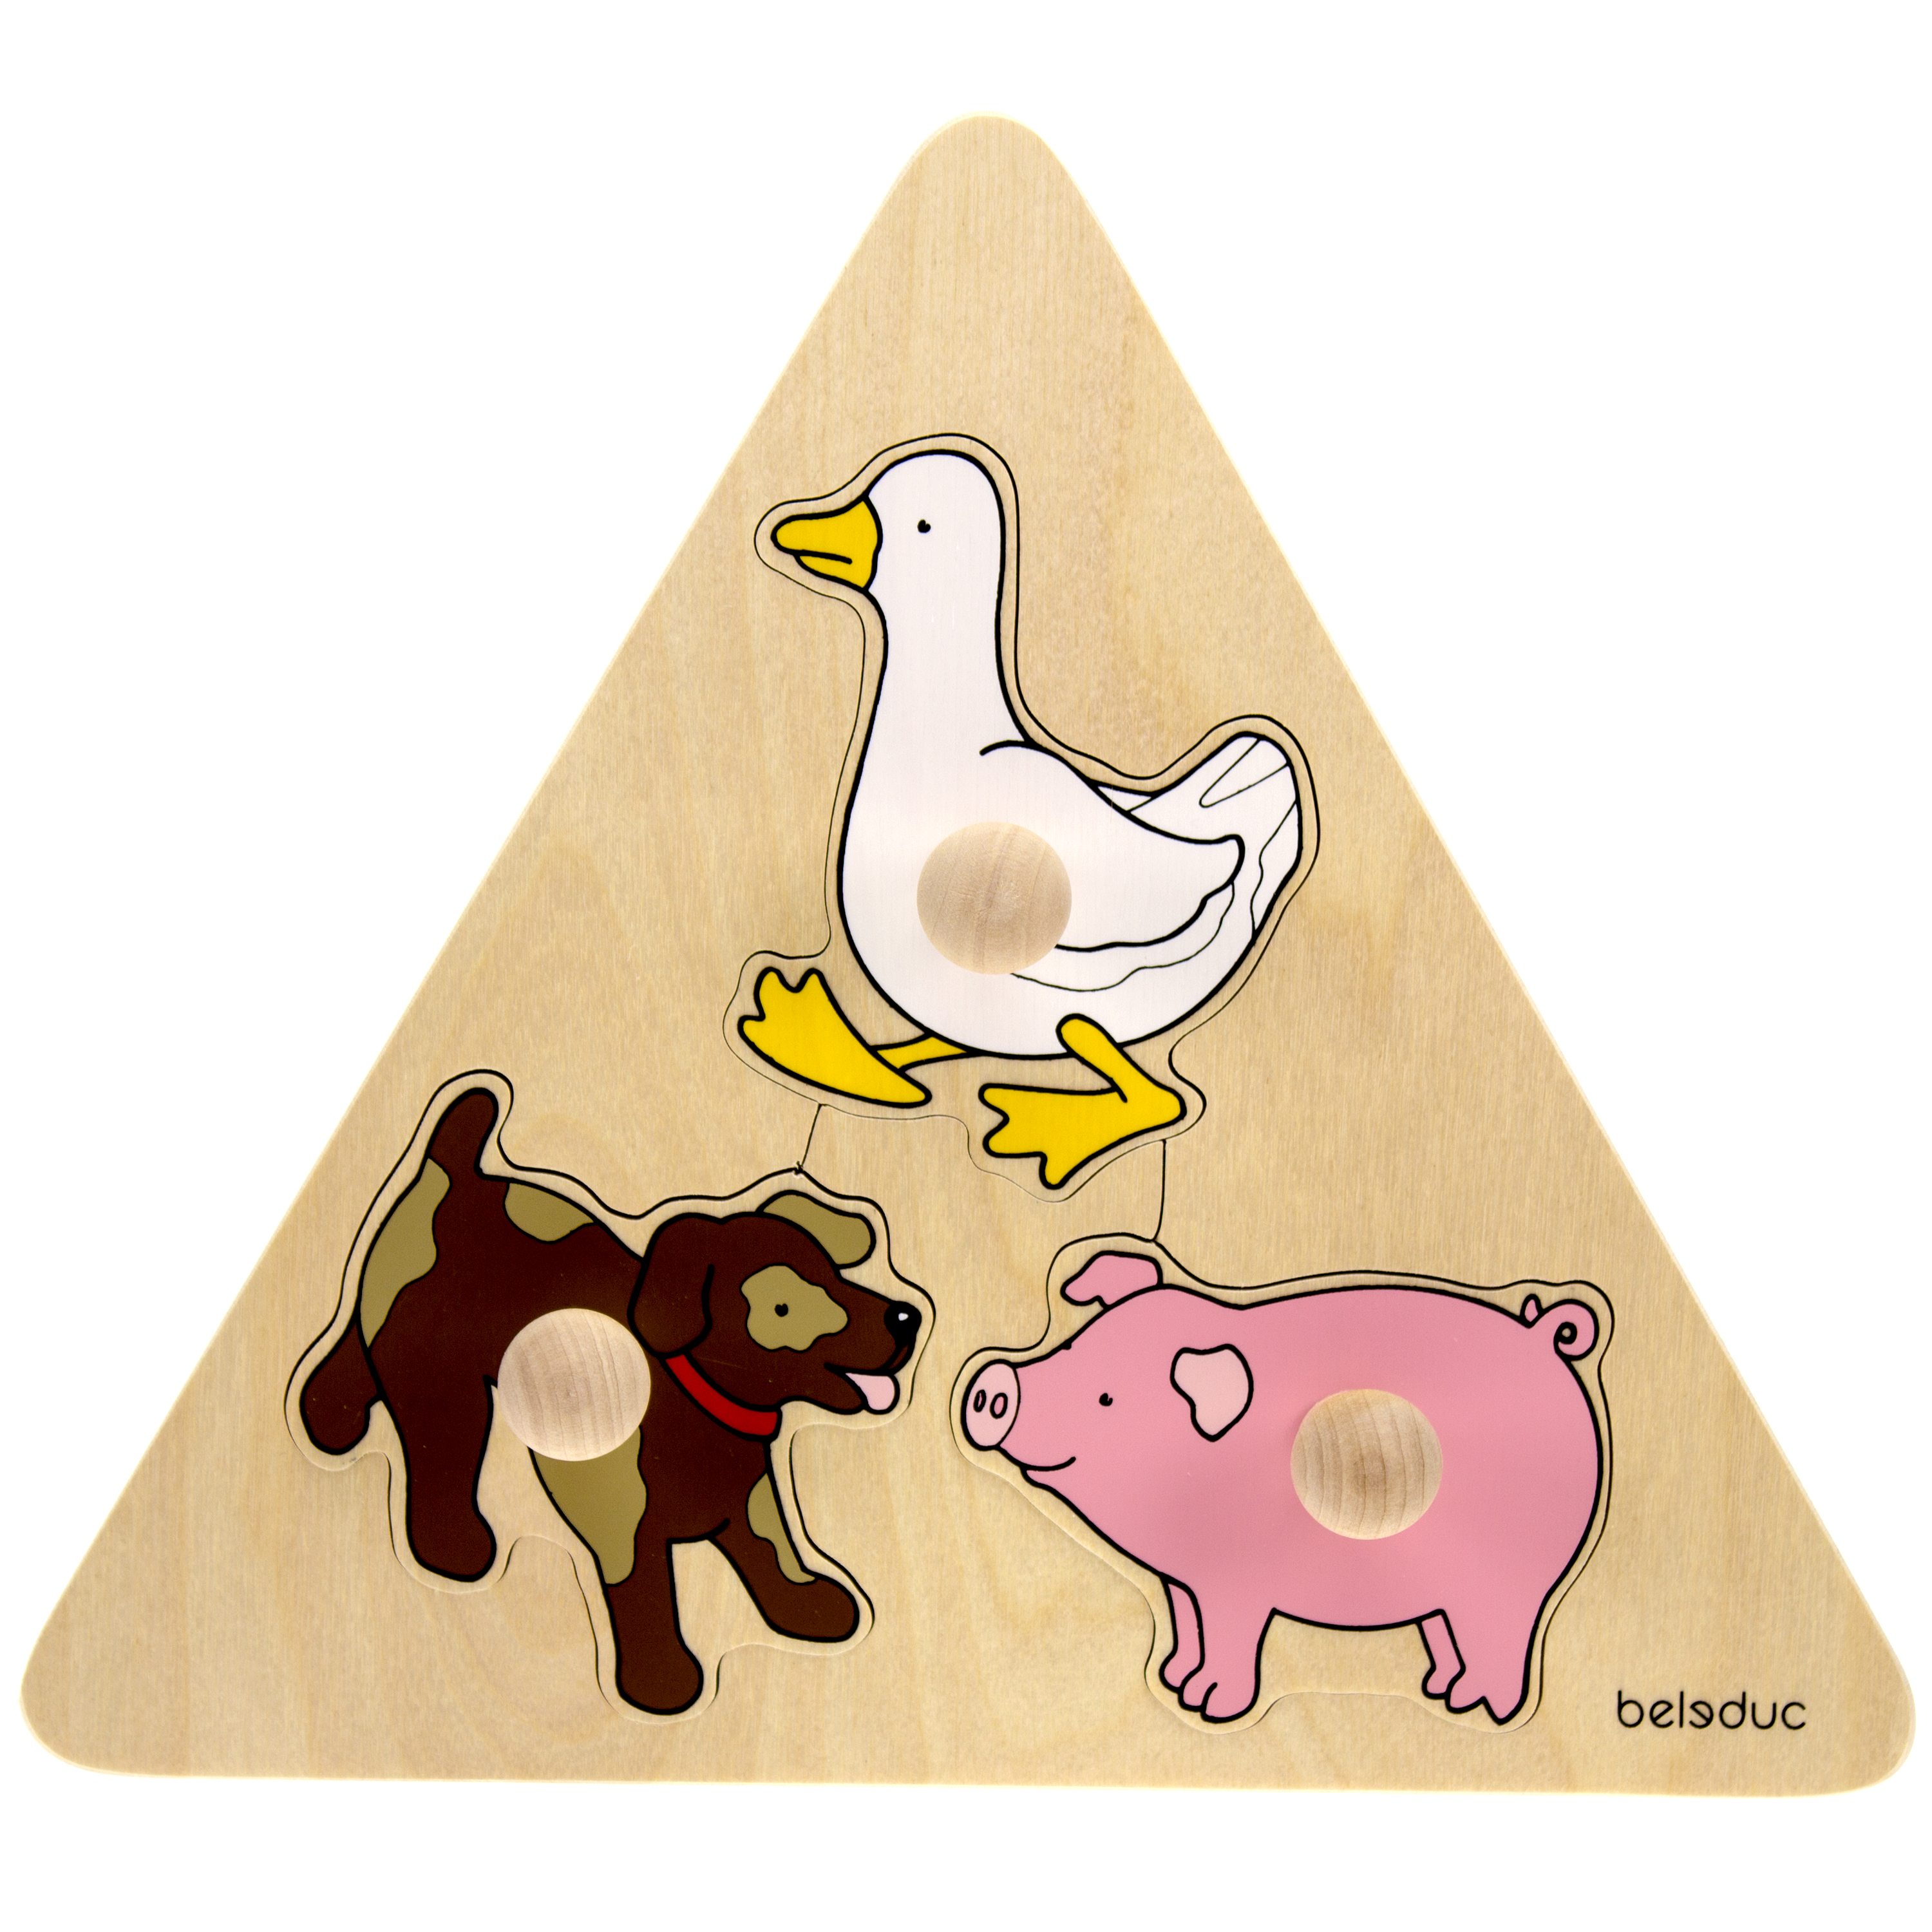 Dreiecks-Knopfpuzzle aus Holz 'Tiere'